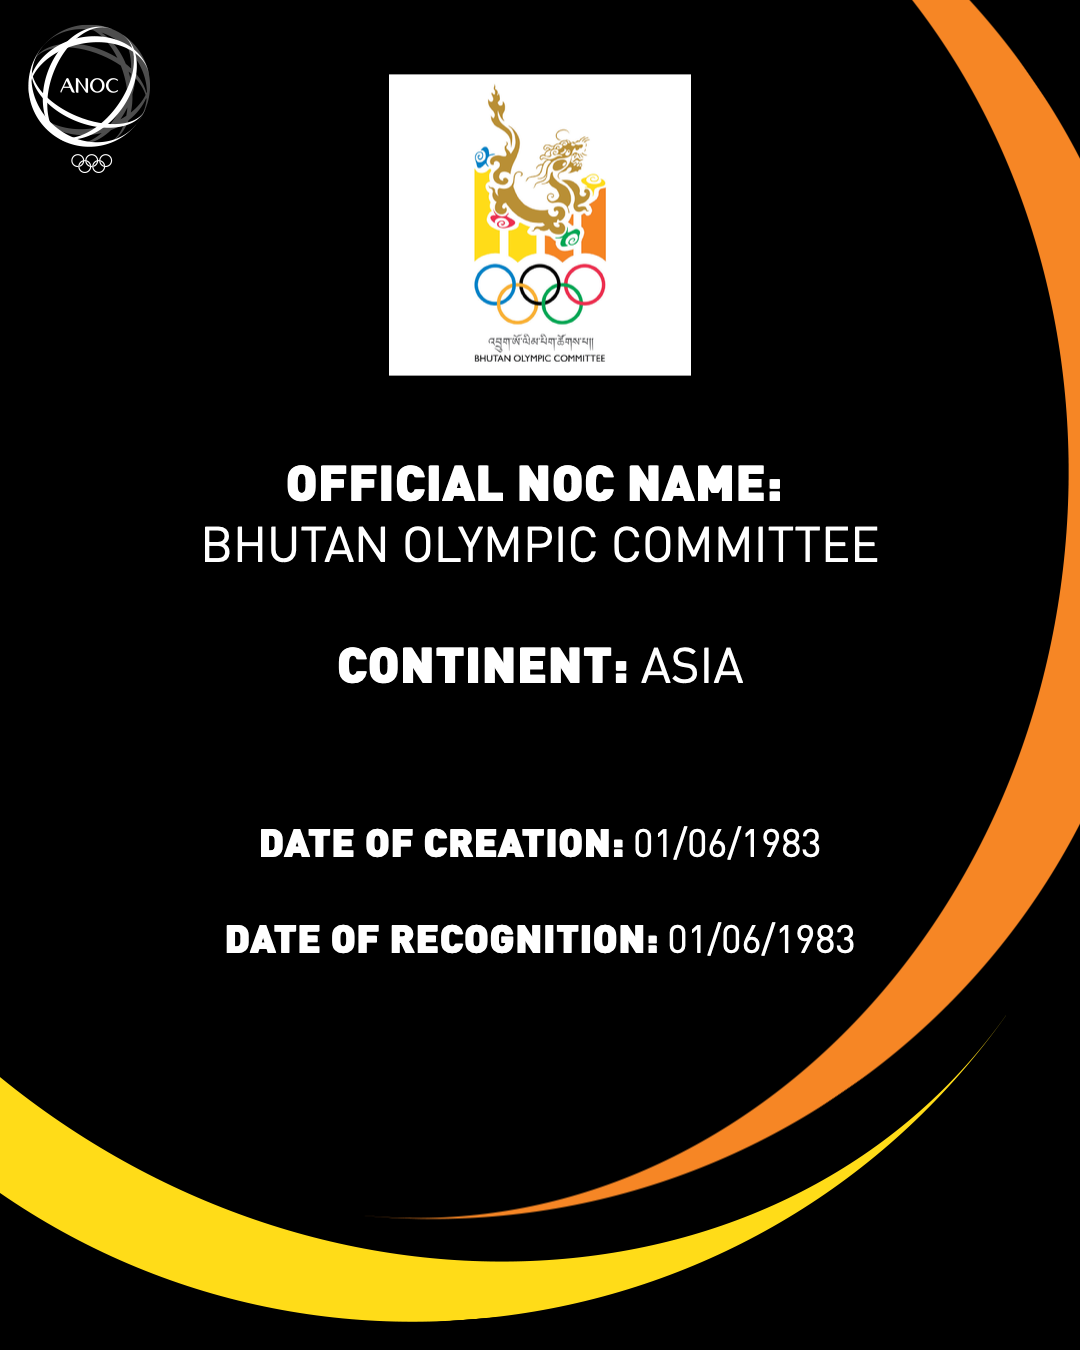 Bhutan Olympic Committee